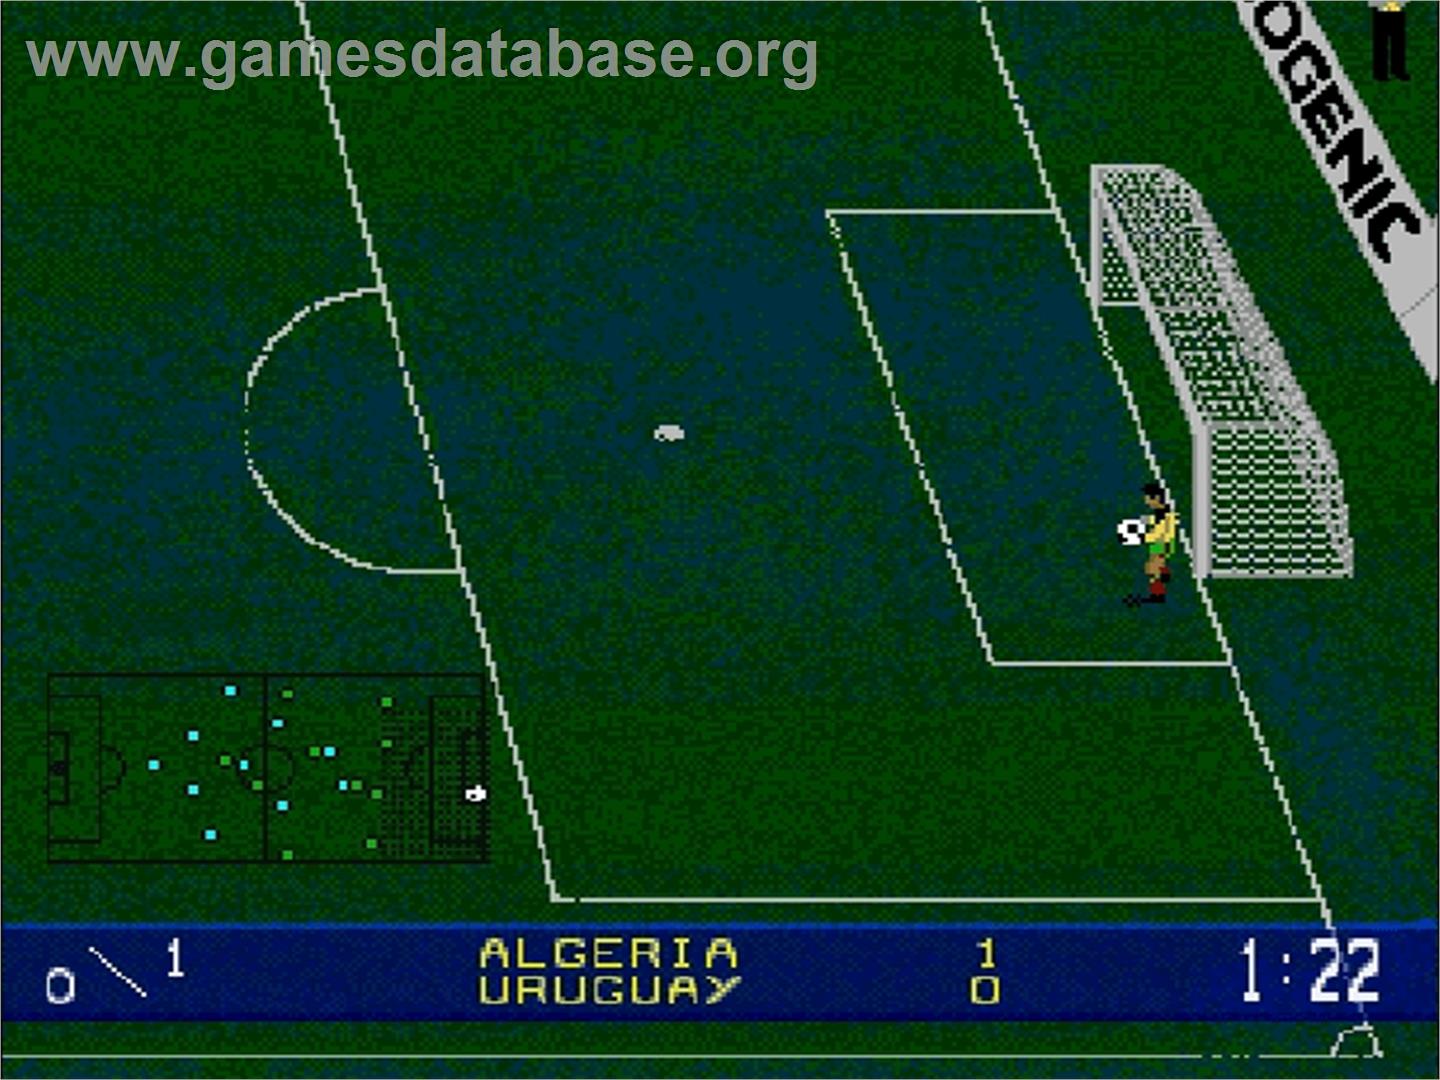 Wembley International Soccer - Commodore Amiga CD32 - Artwork - In Game